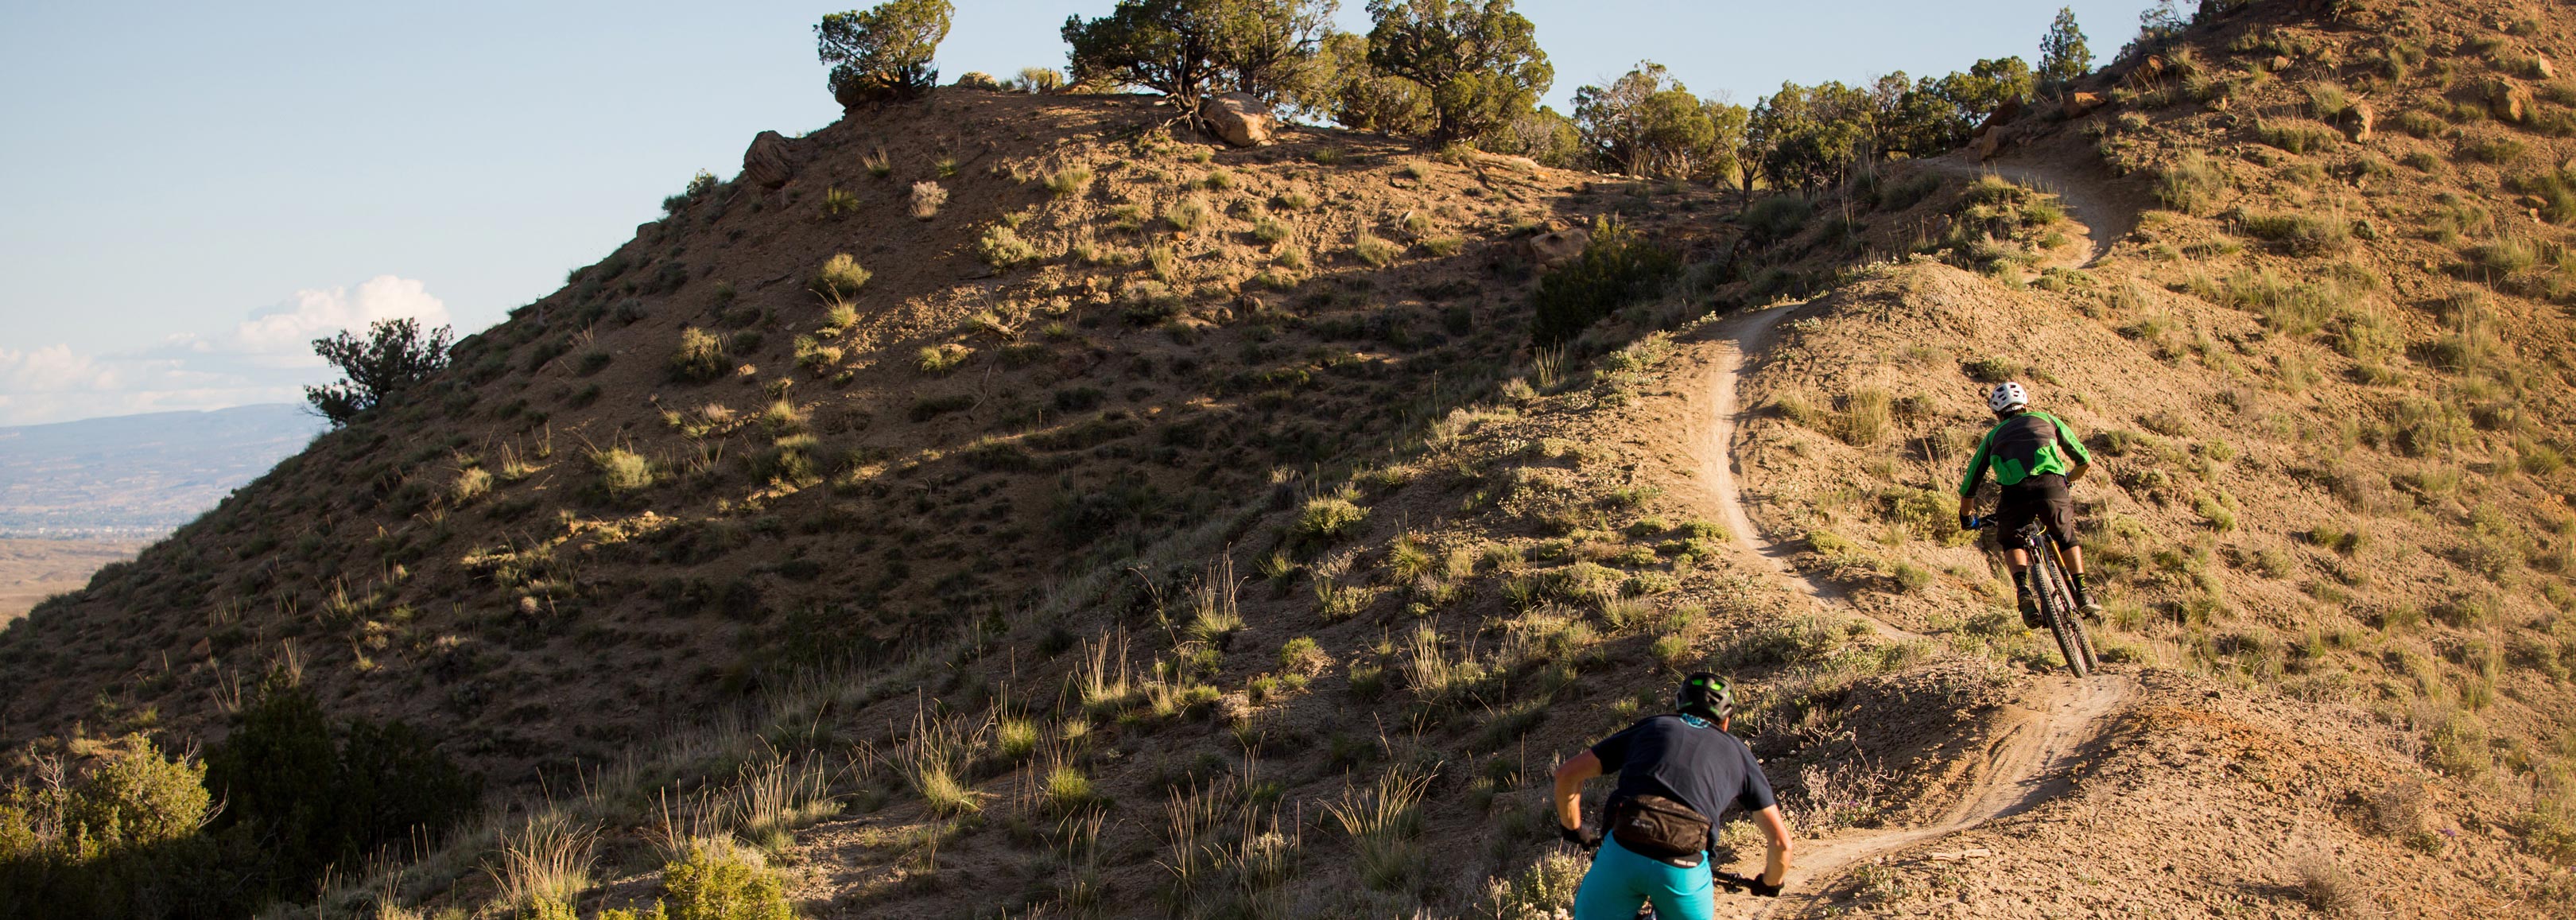 desert singletrack mountain biking